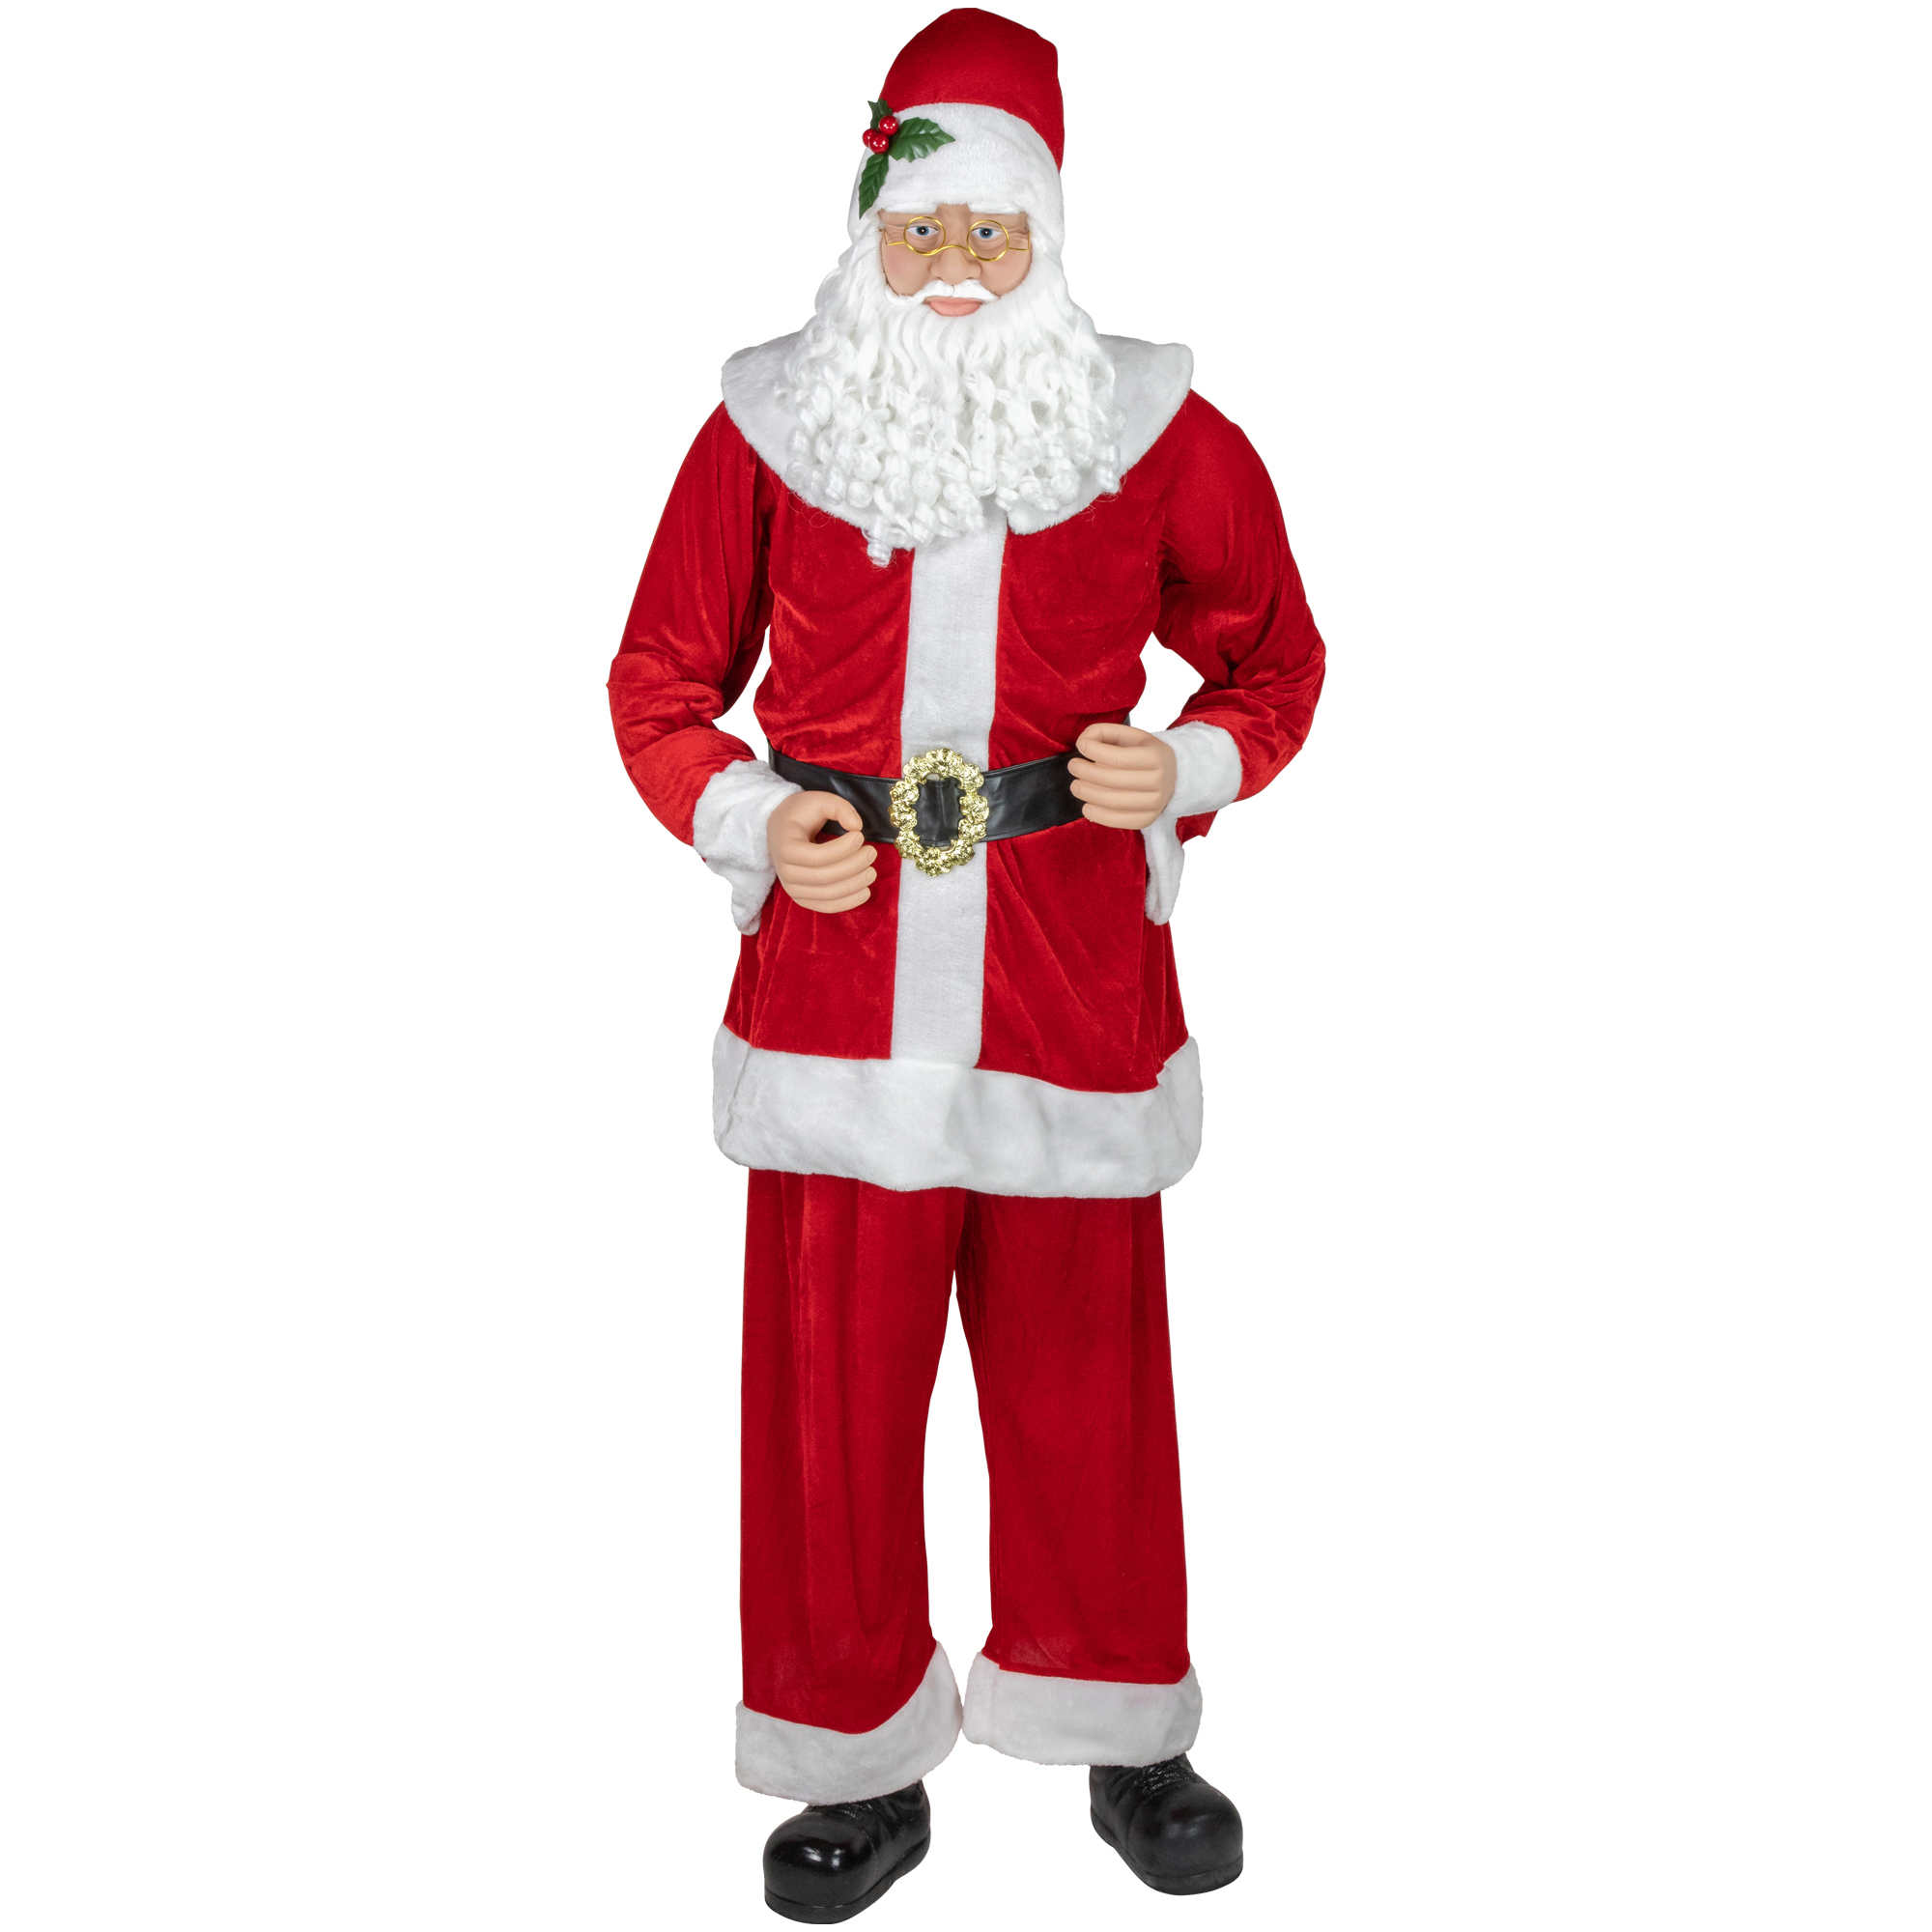 Northlight 72" Life-Size Plush Santa Claus Standing or Sitting Christmas Figure